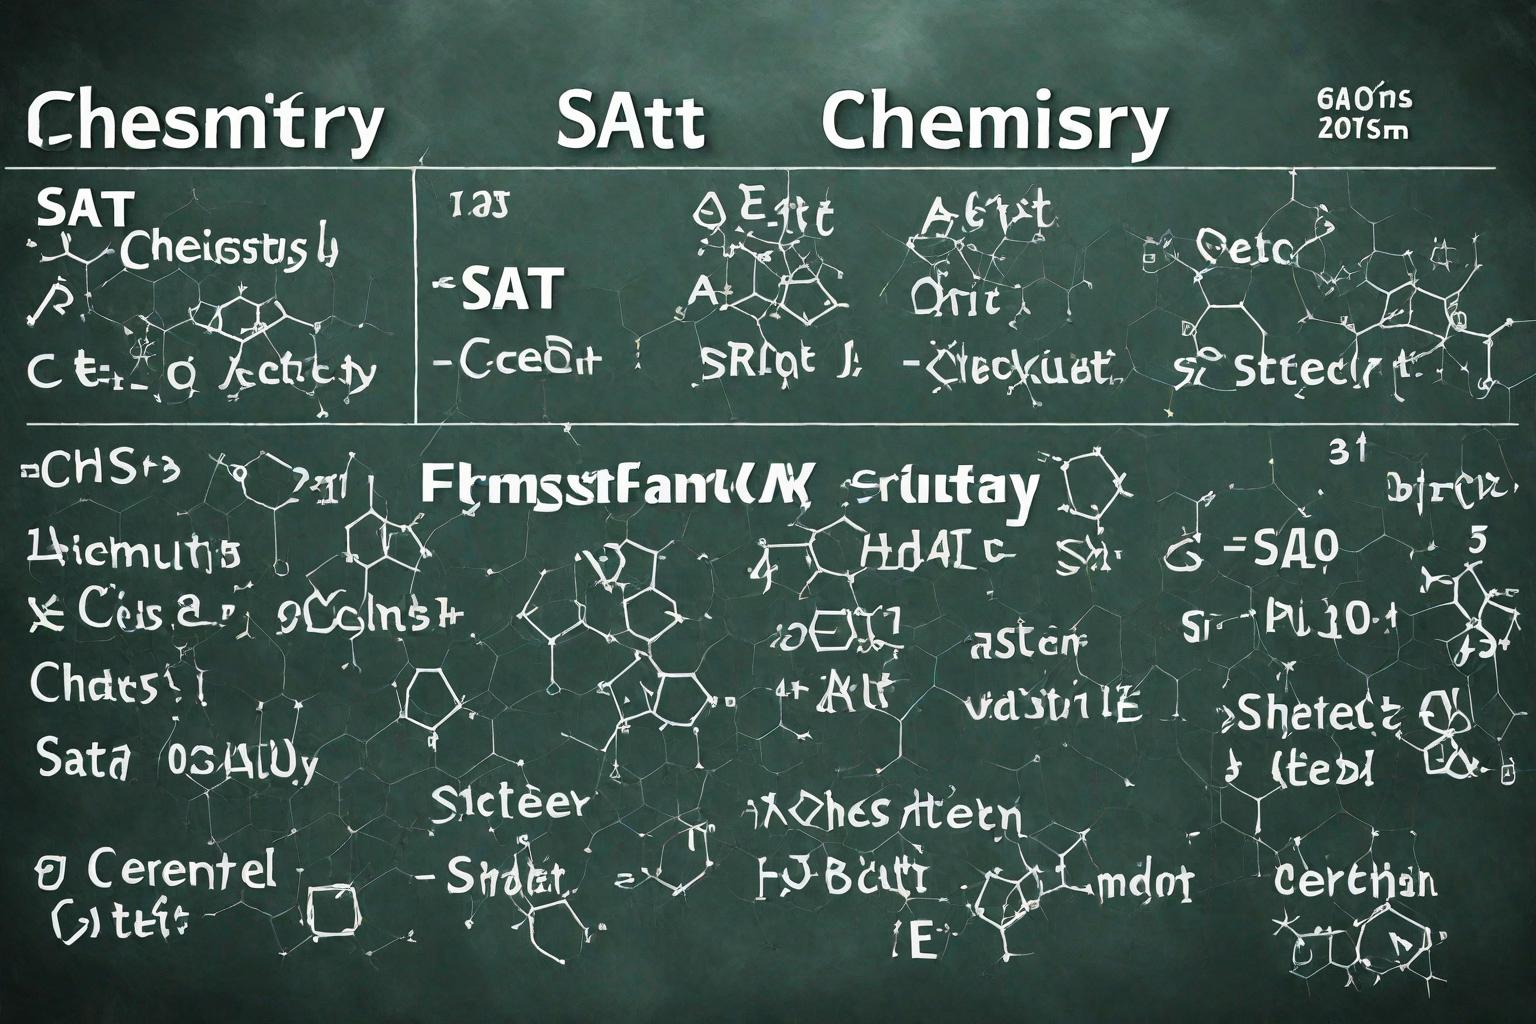 SAT Chemistry - Chemistry Bench